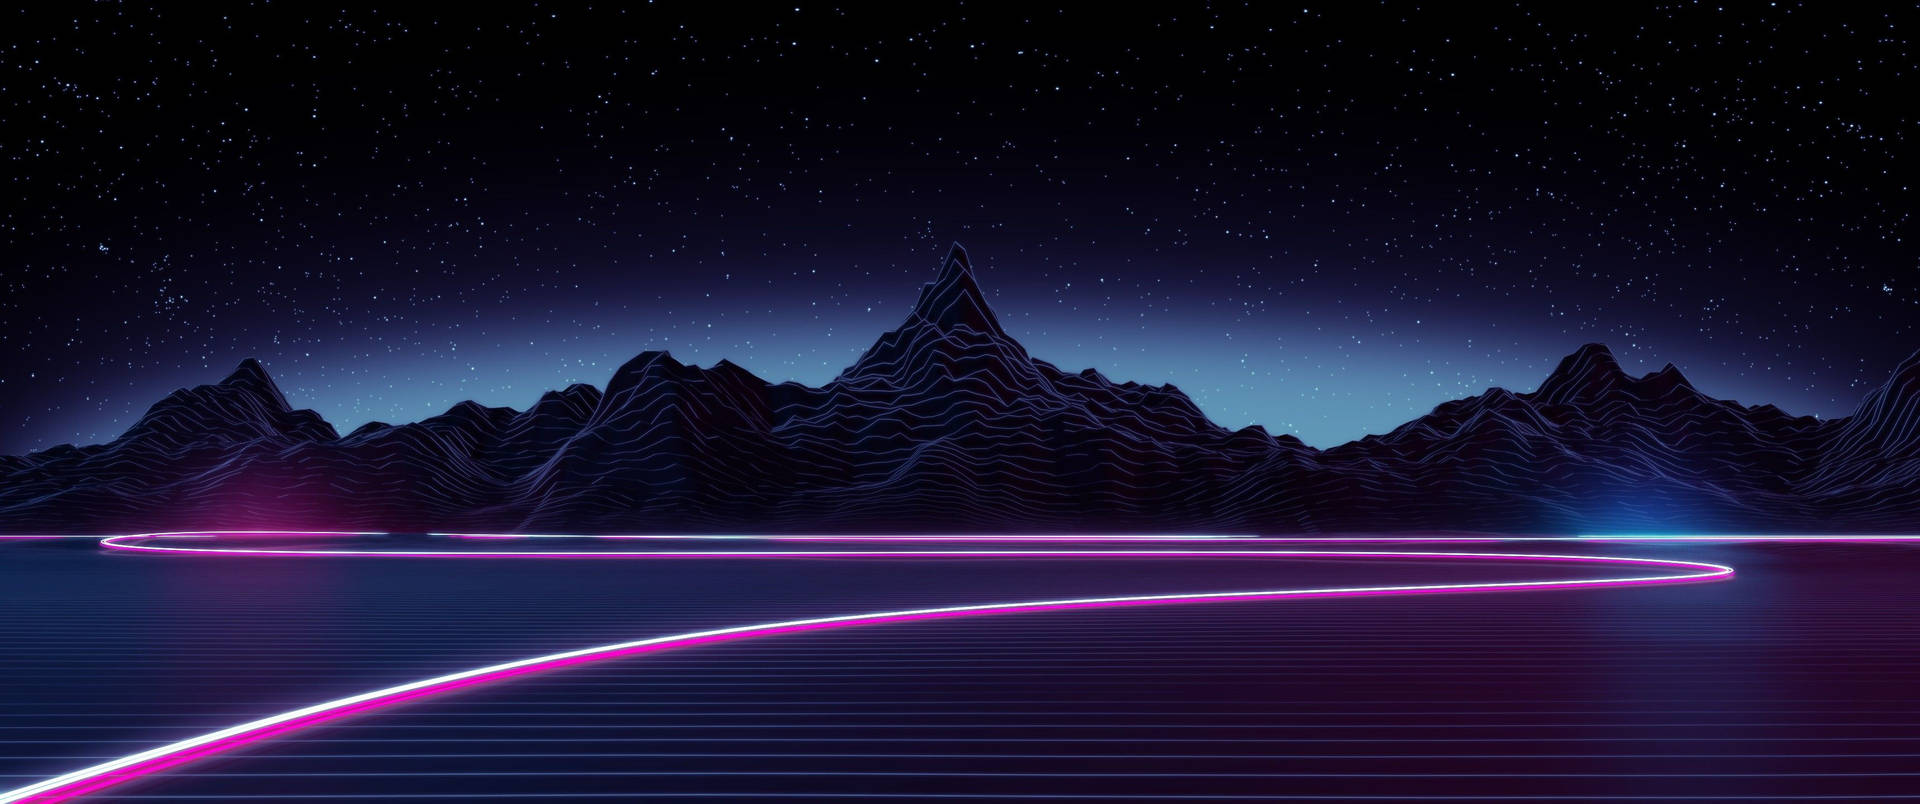 Synthwave Mountain Landscape Background